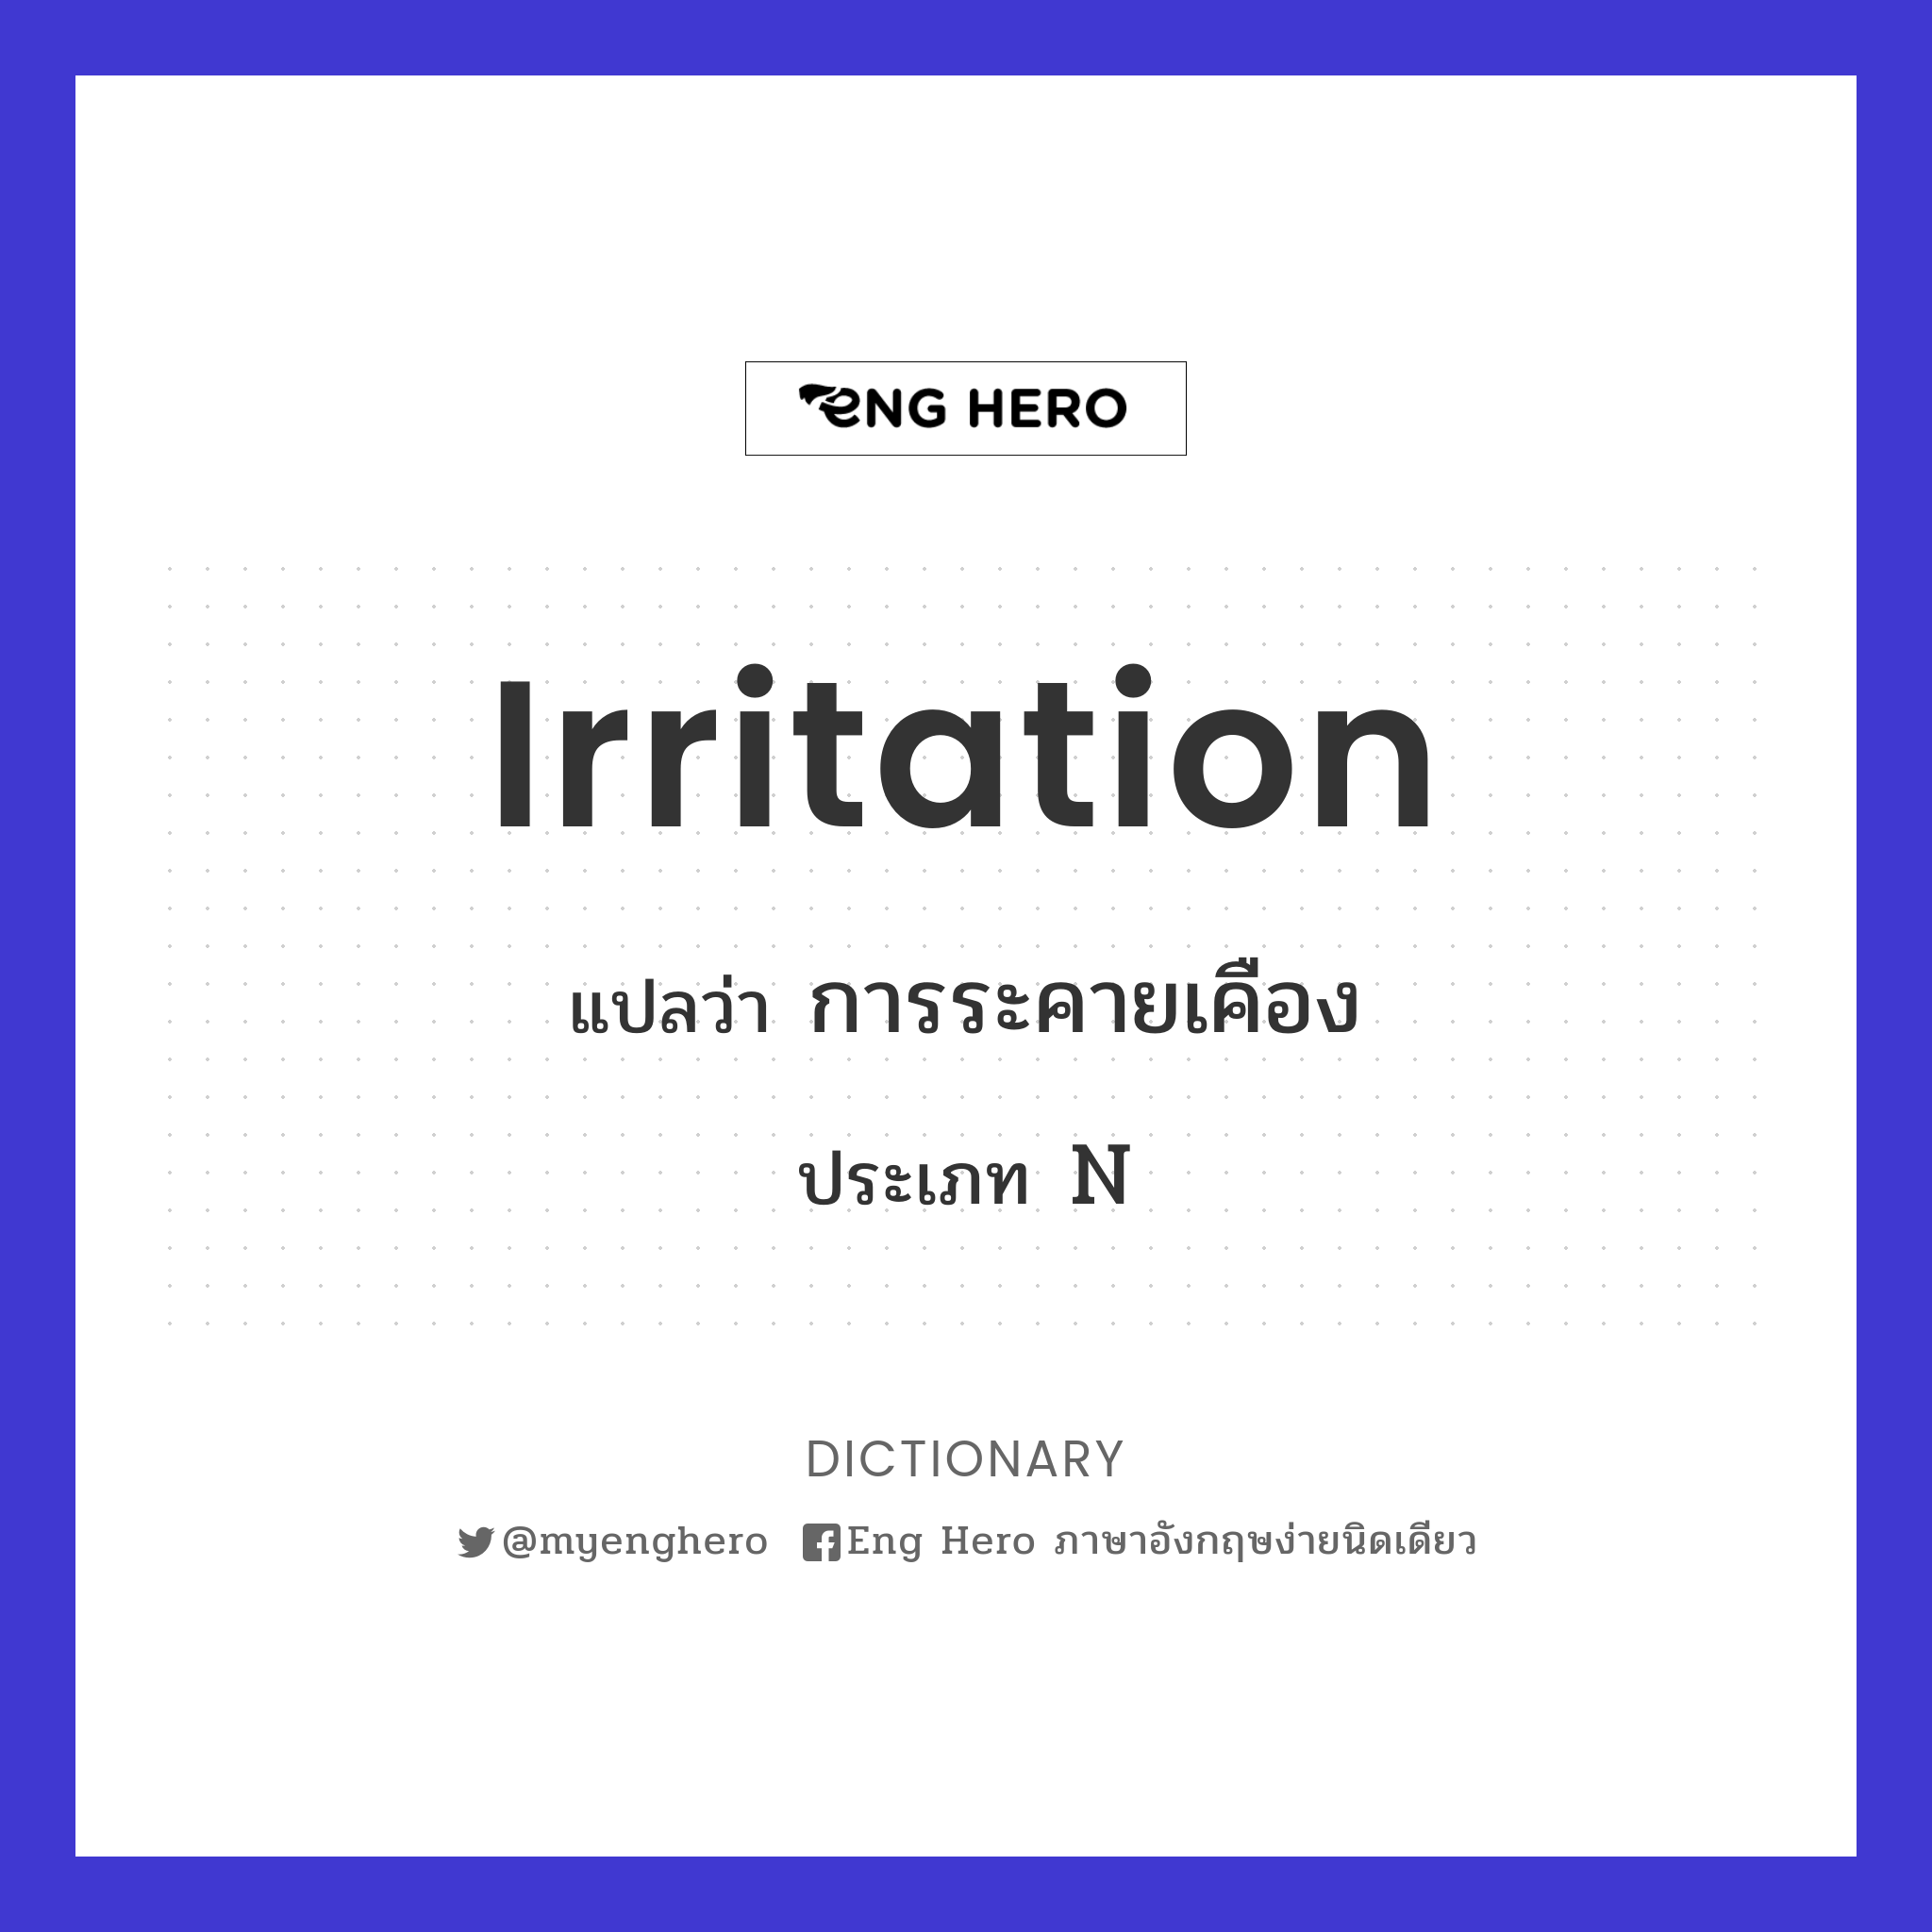 irritation